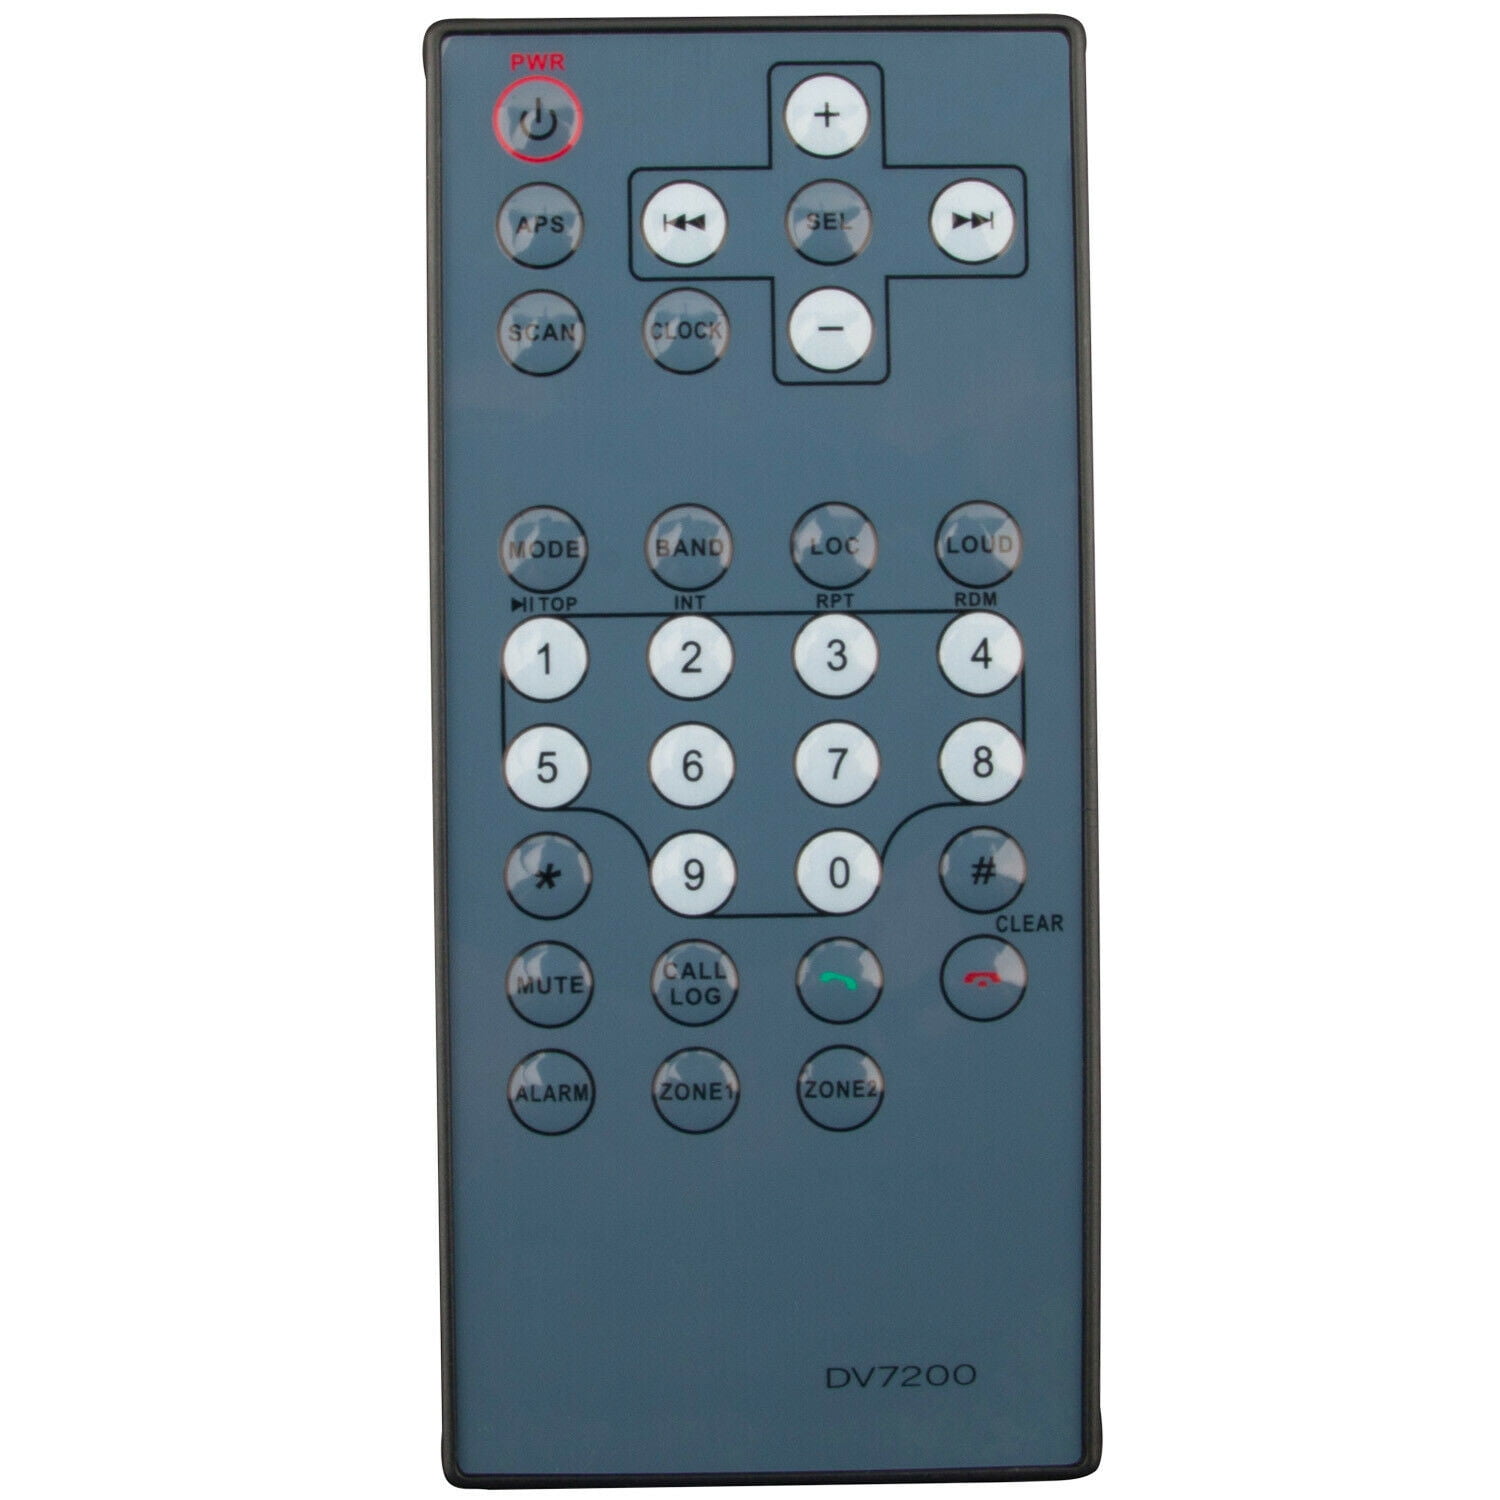 New Remote Control DV7200 for Furrion Entertainment System DV7200 DV